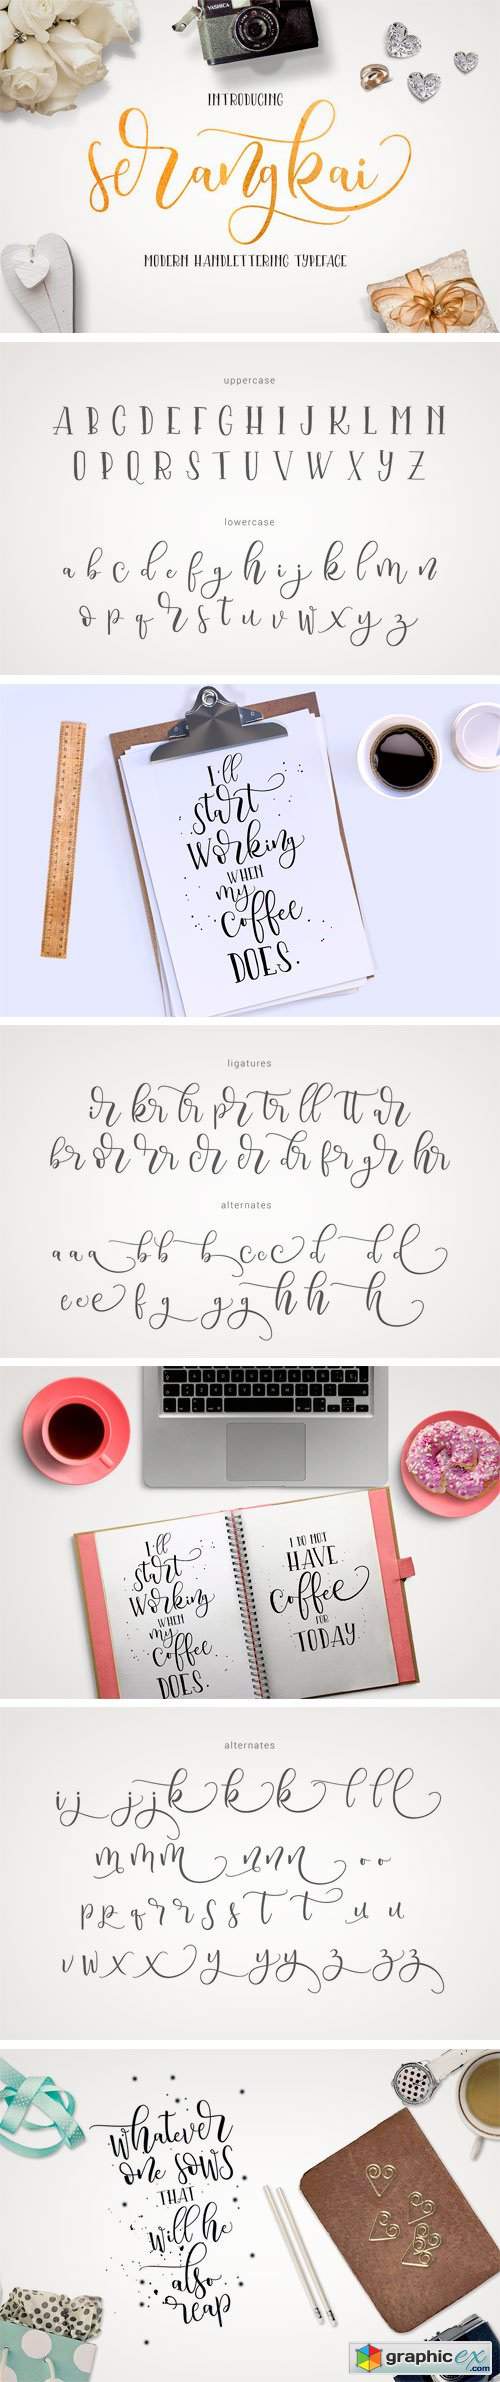 Serangkai Typeface